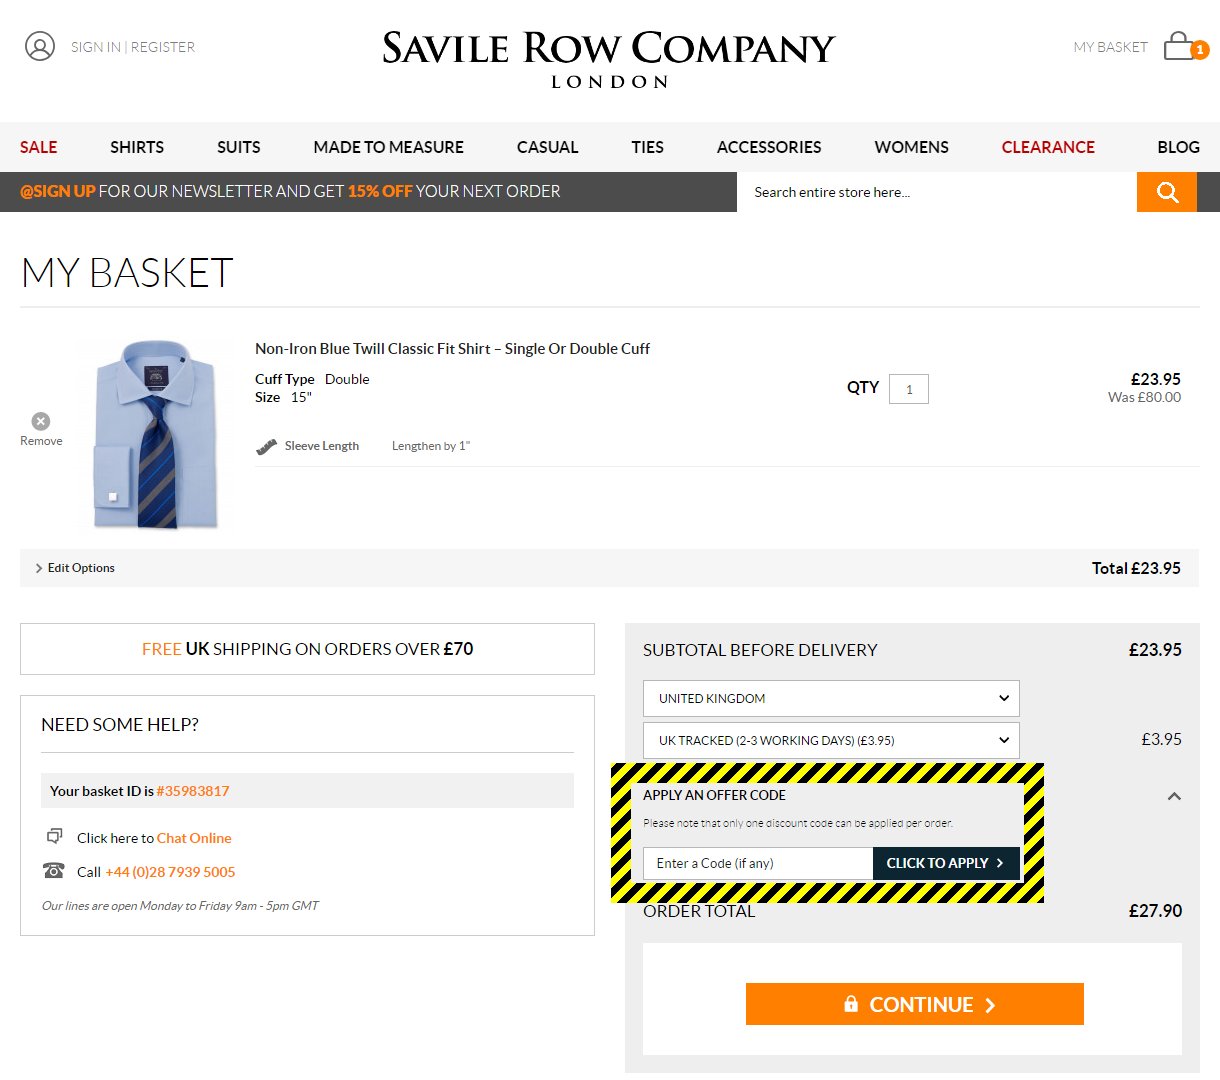 How to use a Savile Row Company Discount Code